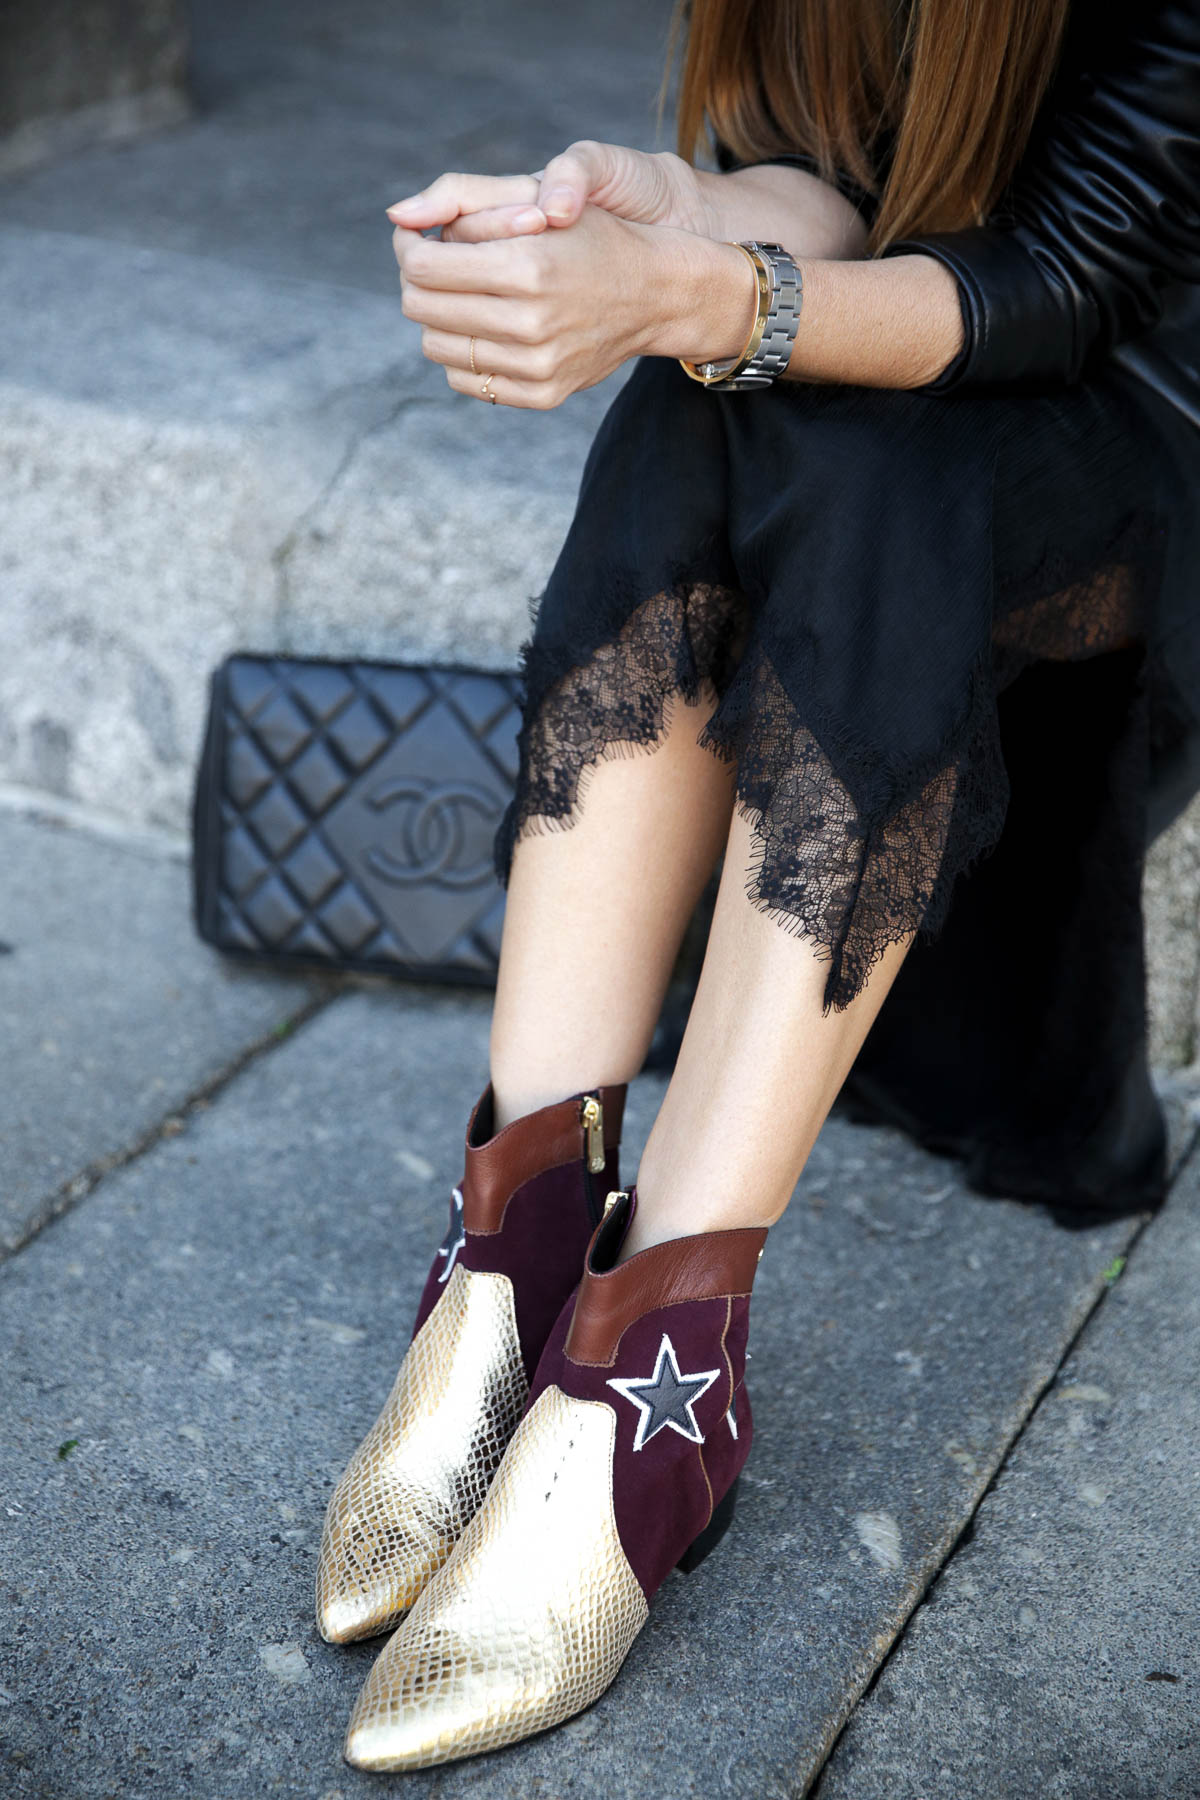 blogger-blog-bartabac-streetstyle-fashion-moda-look-portugal-braga-cuple-boots-slip-dress-schott-11